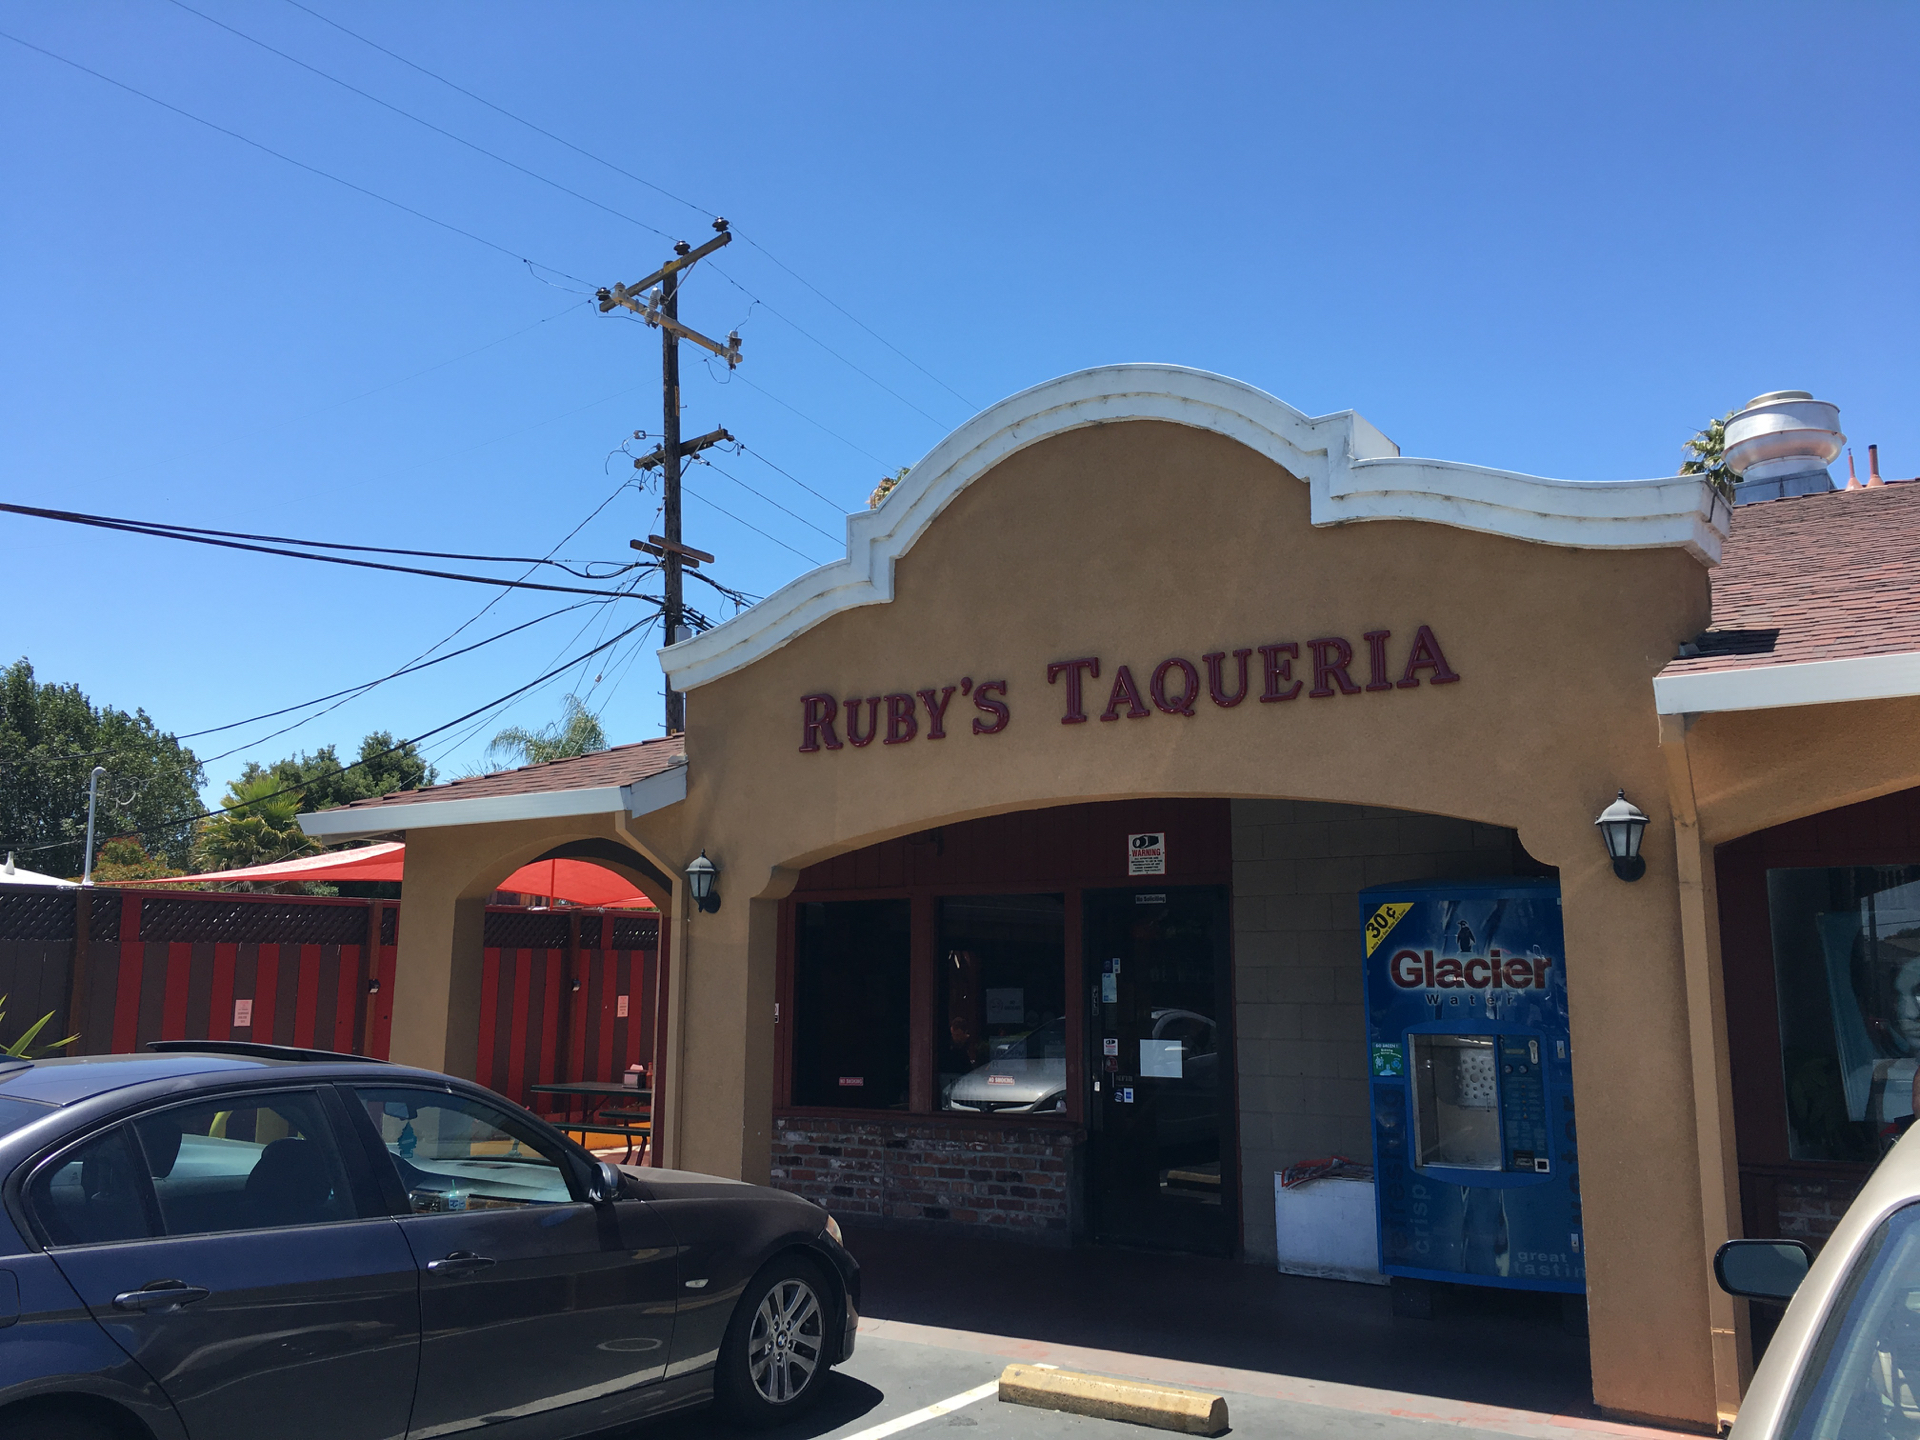 Outside Ruby’s Taqueria in Sunnyvale.